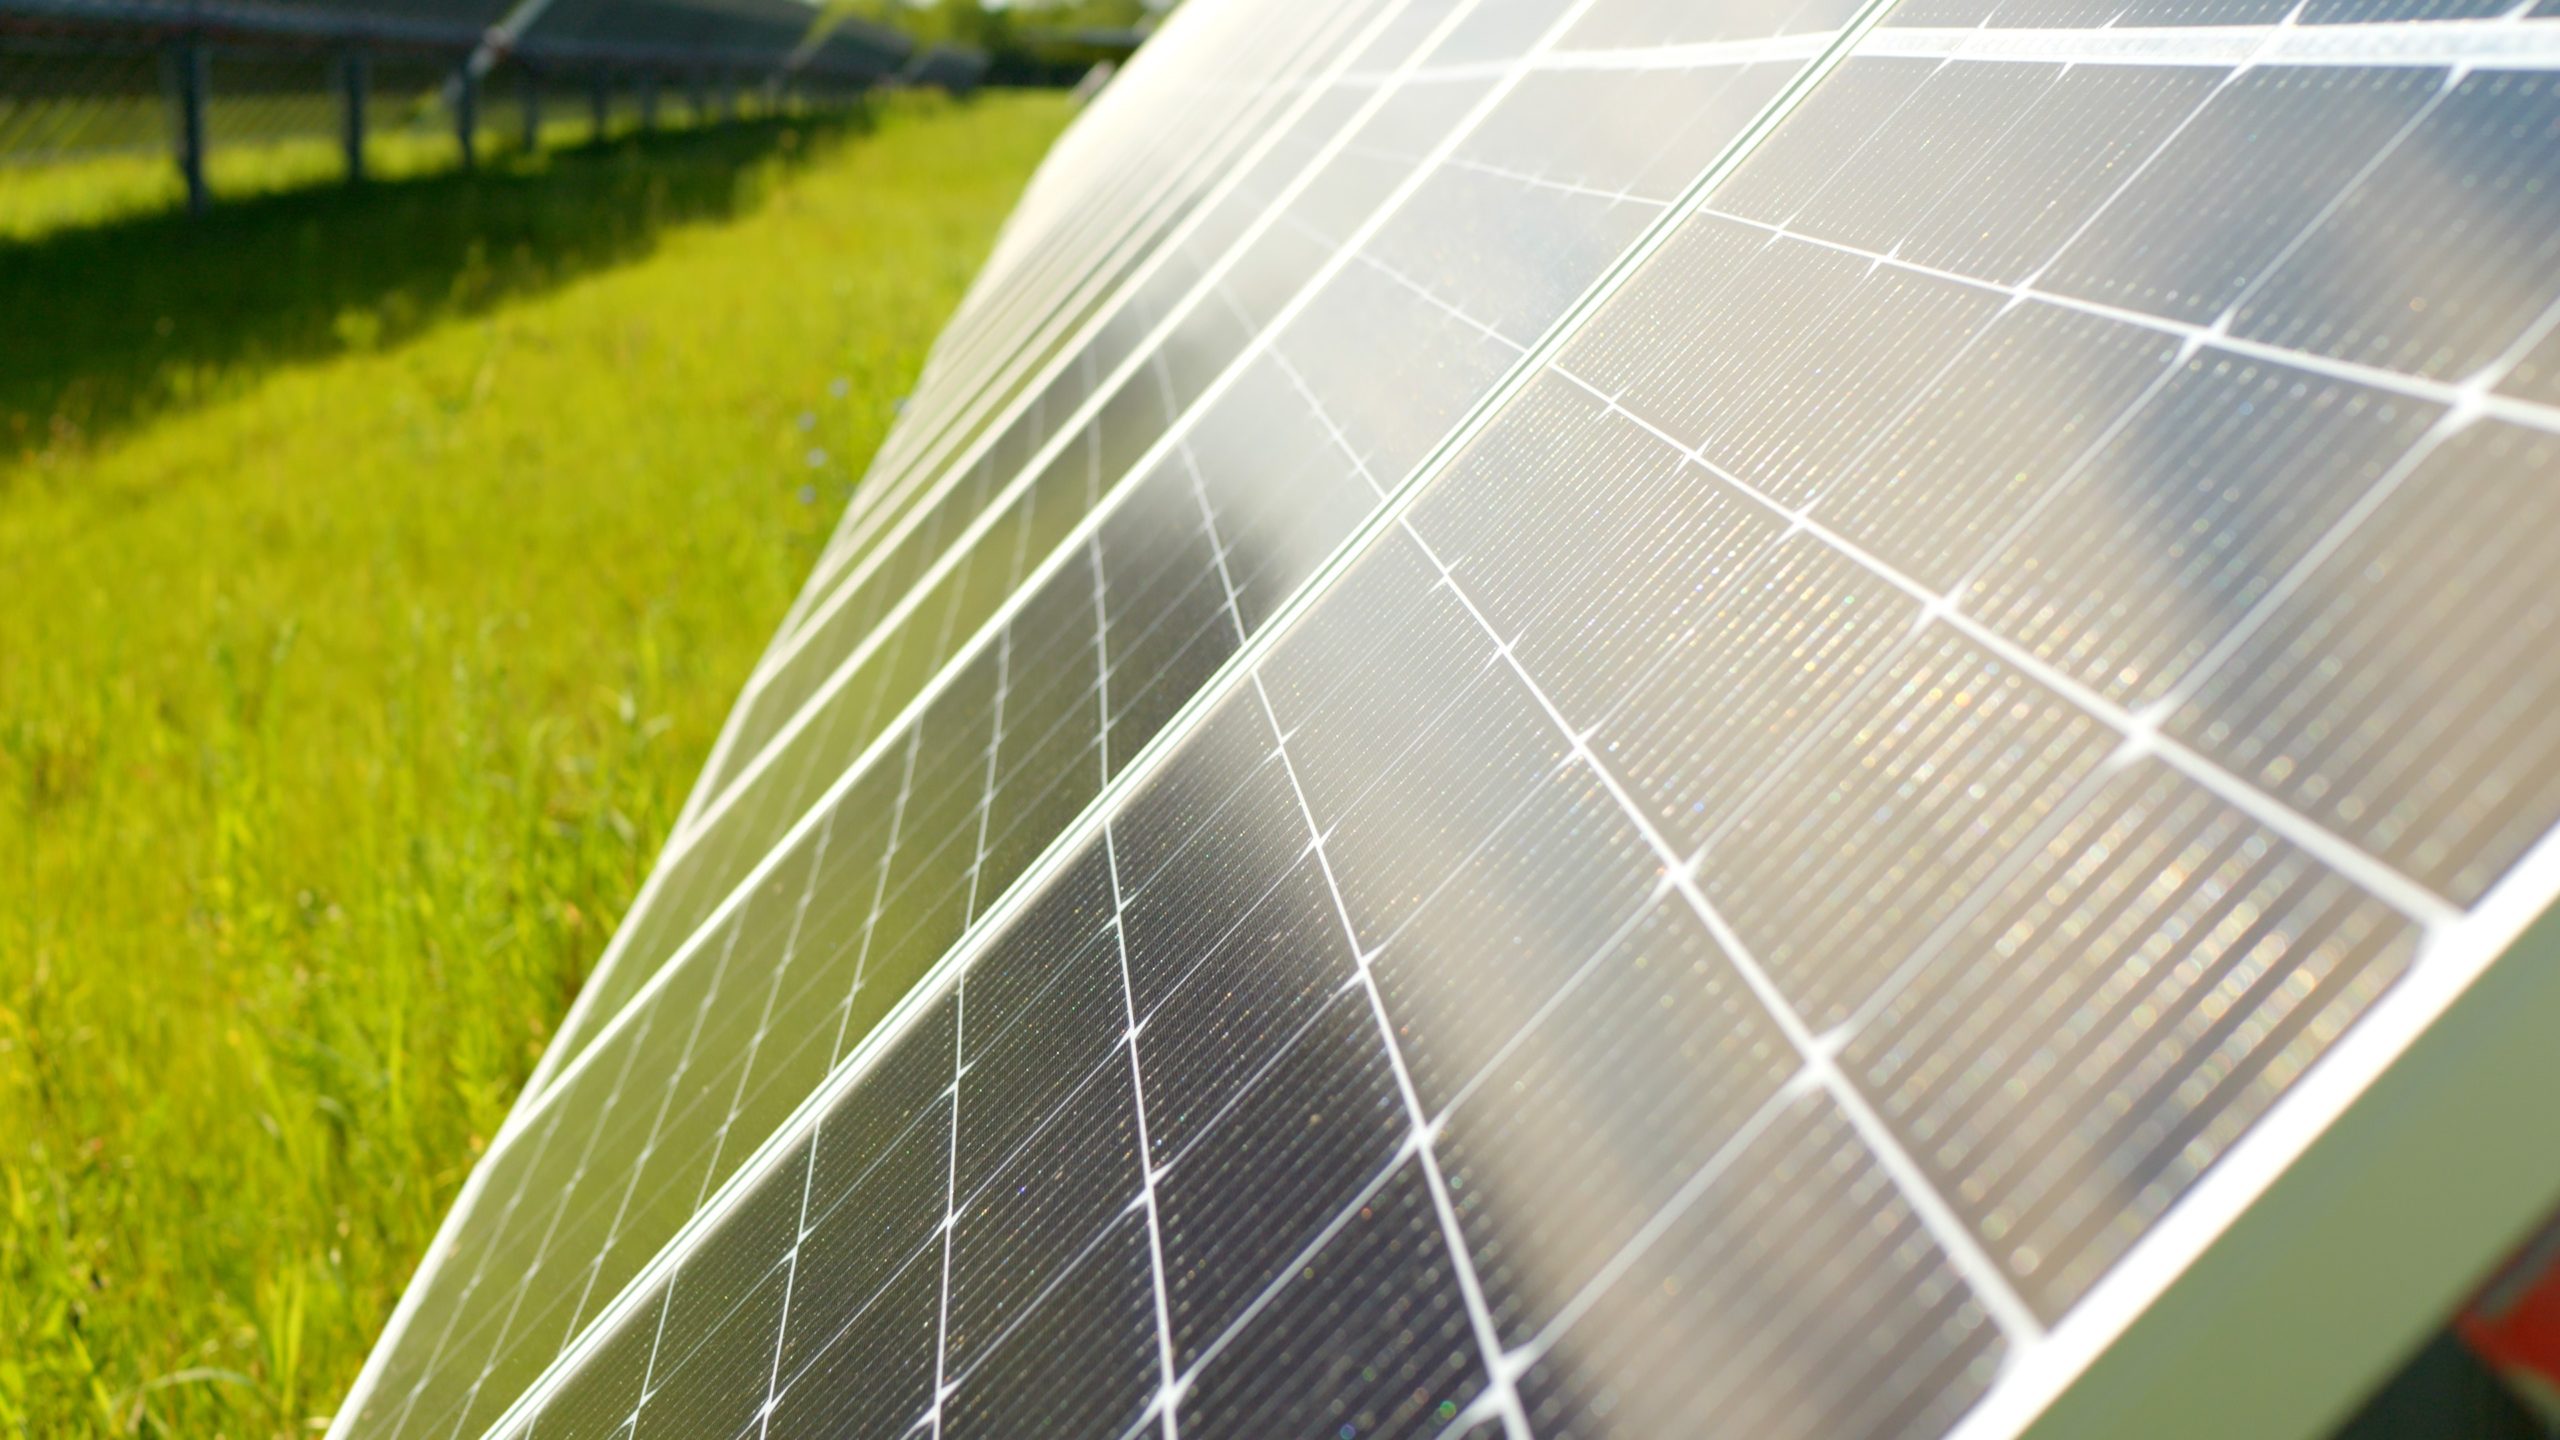 Close up of solar panel